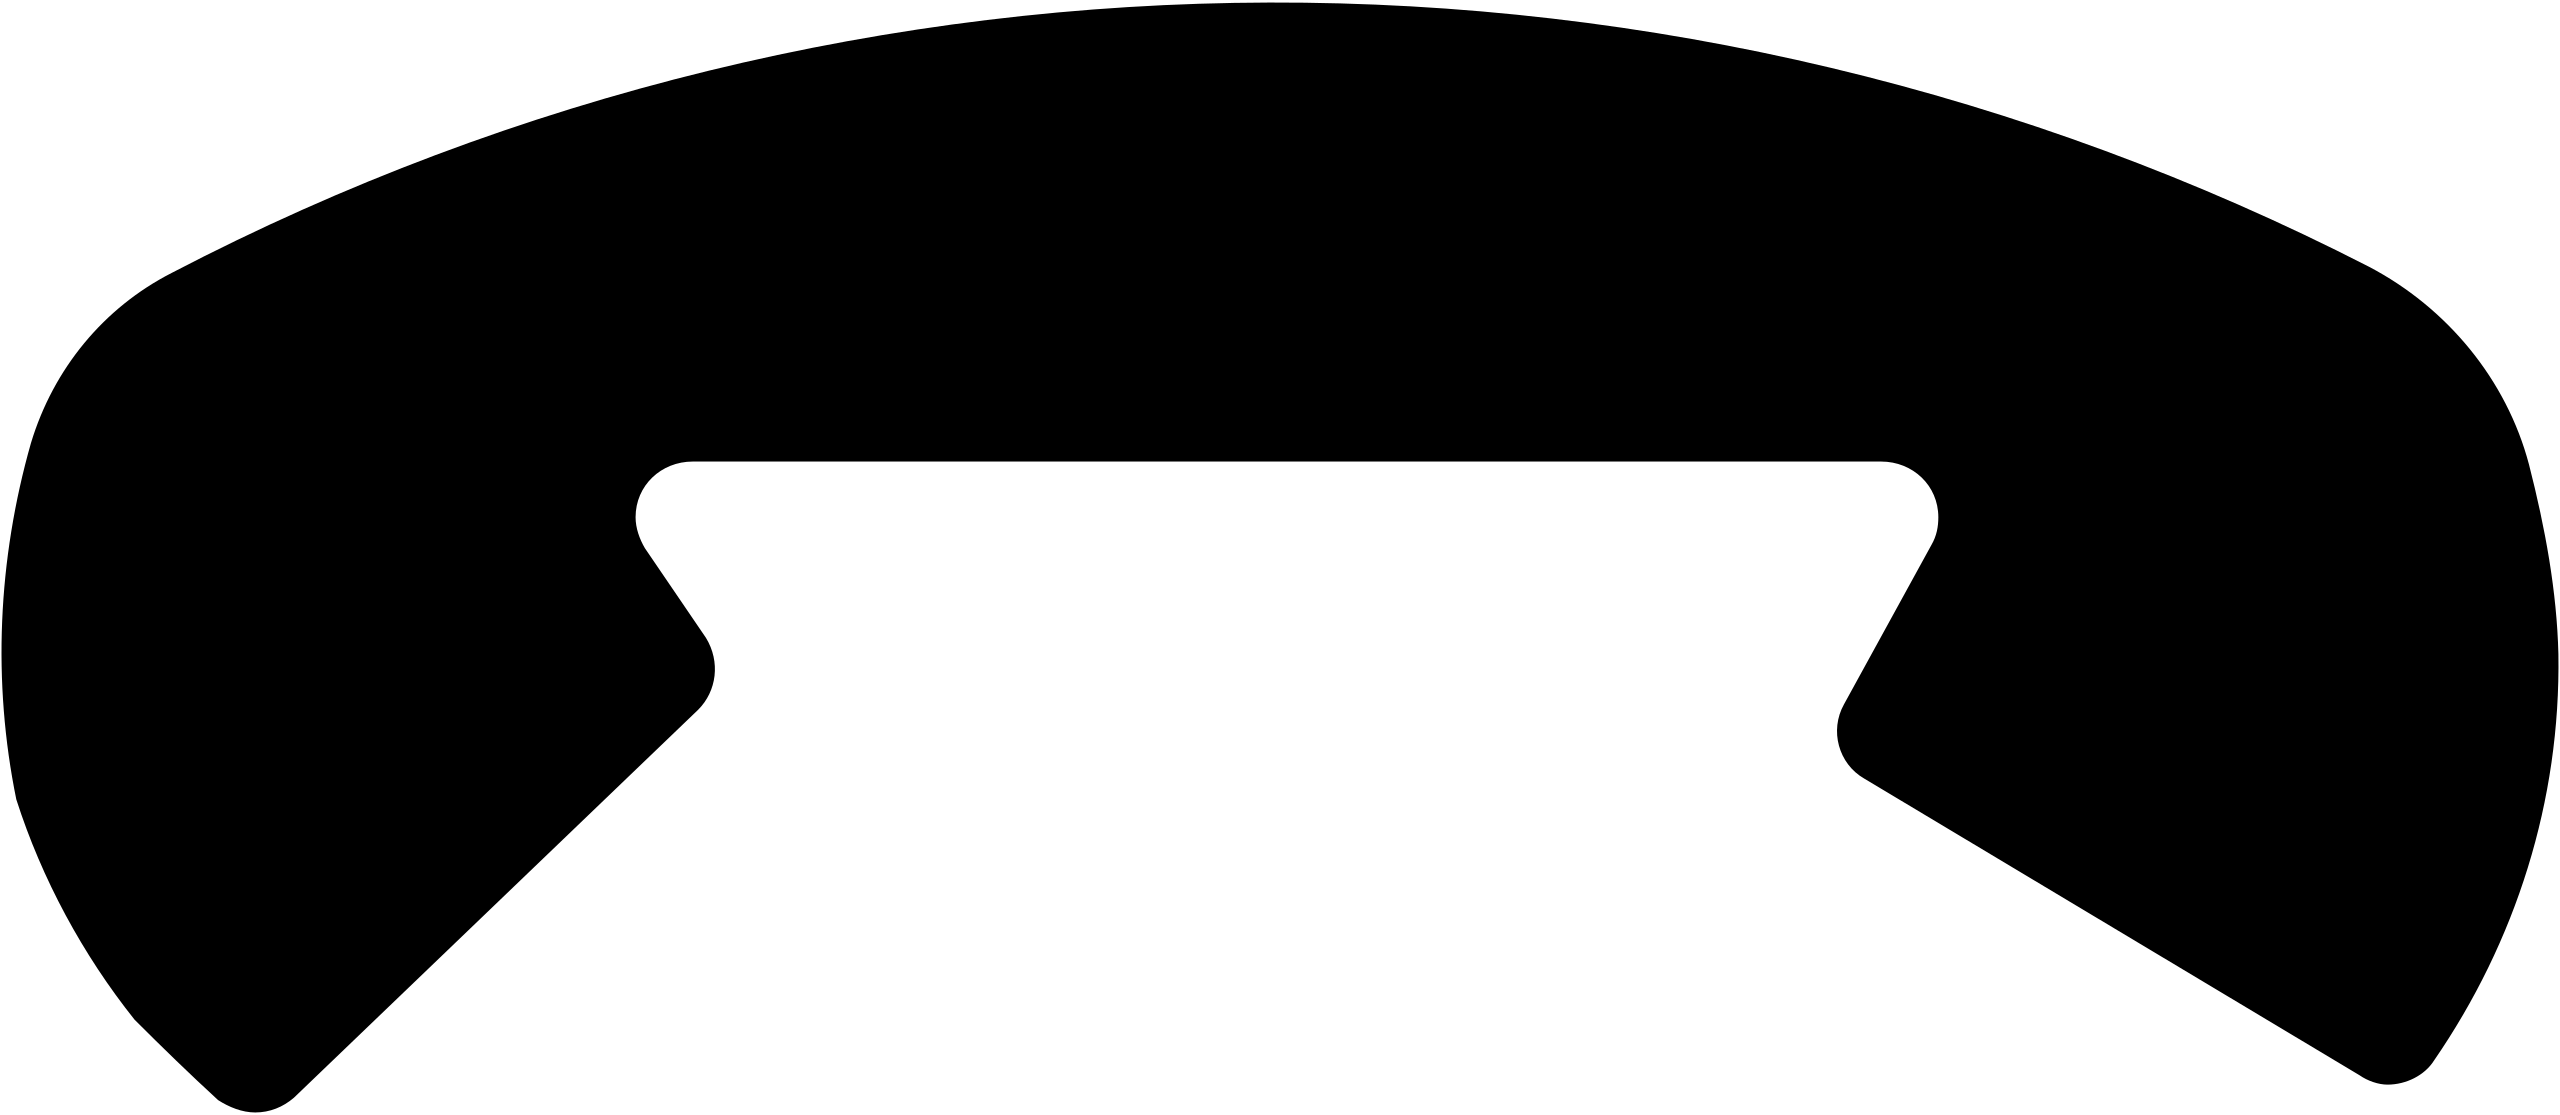 File:Echo tv logo history.png - Wikimedia Commons